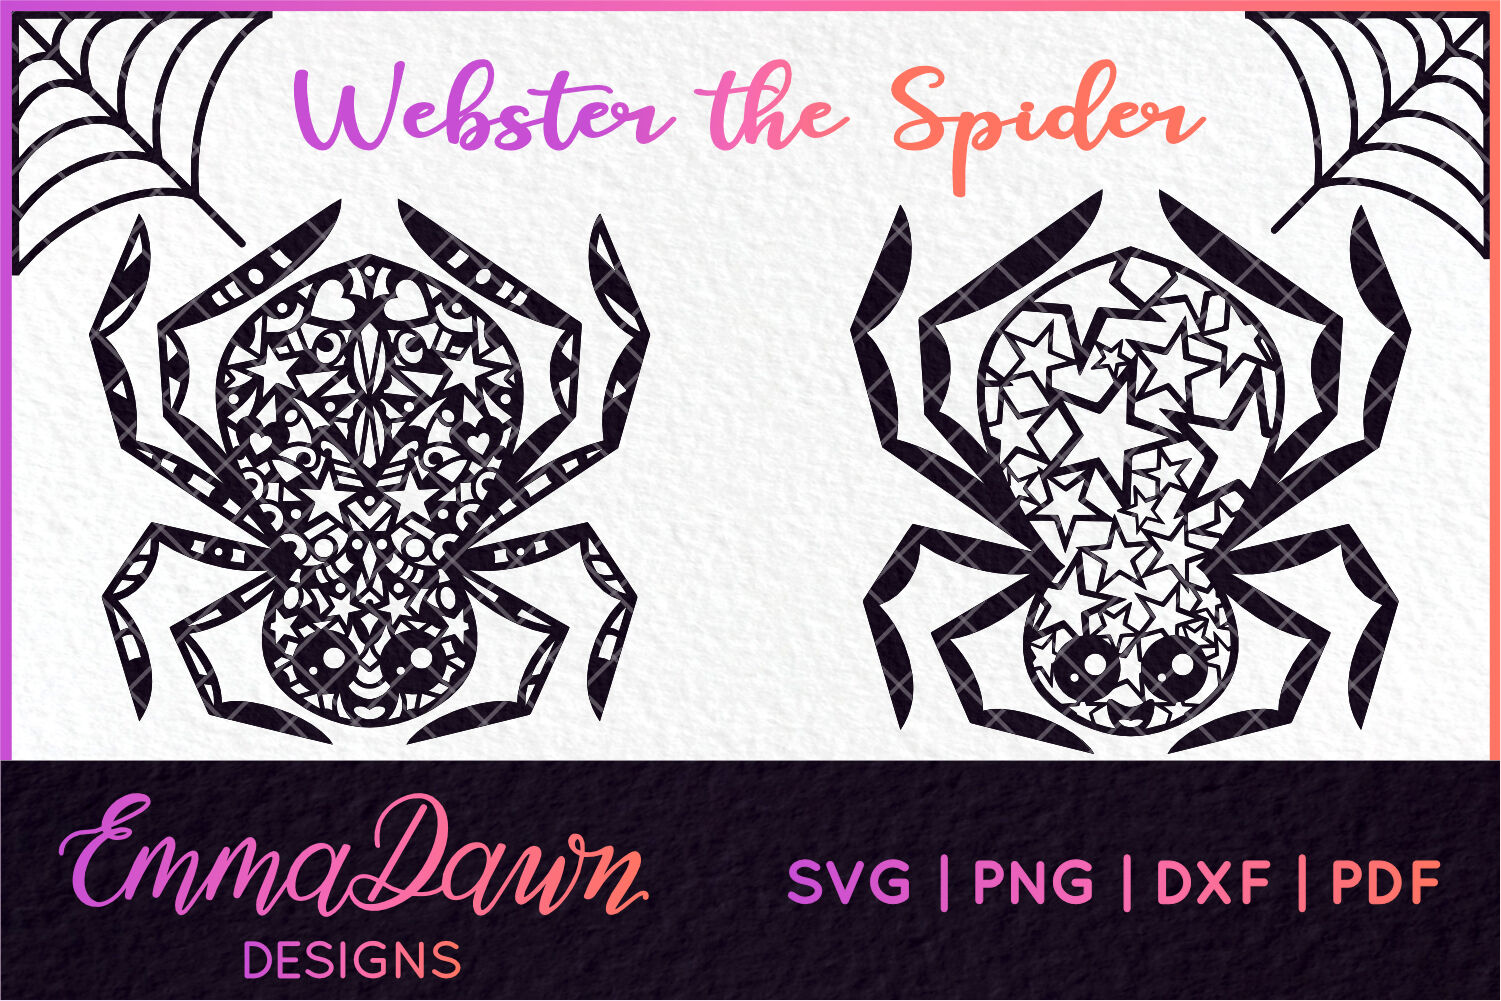 Webster The Spider Mini Bundle Halloween Zentangle Designs By Emma Dawn Designs Thehungryjpeg Com